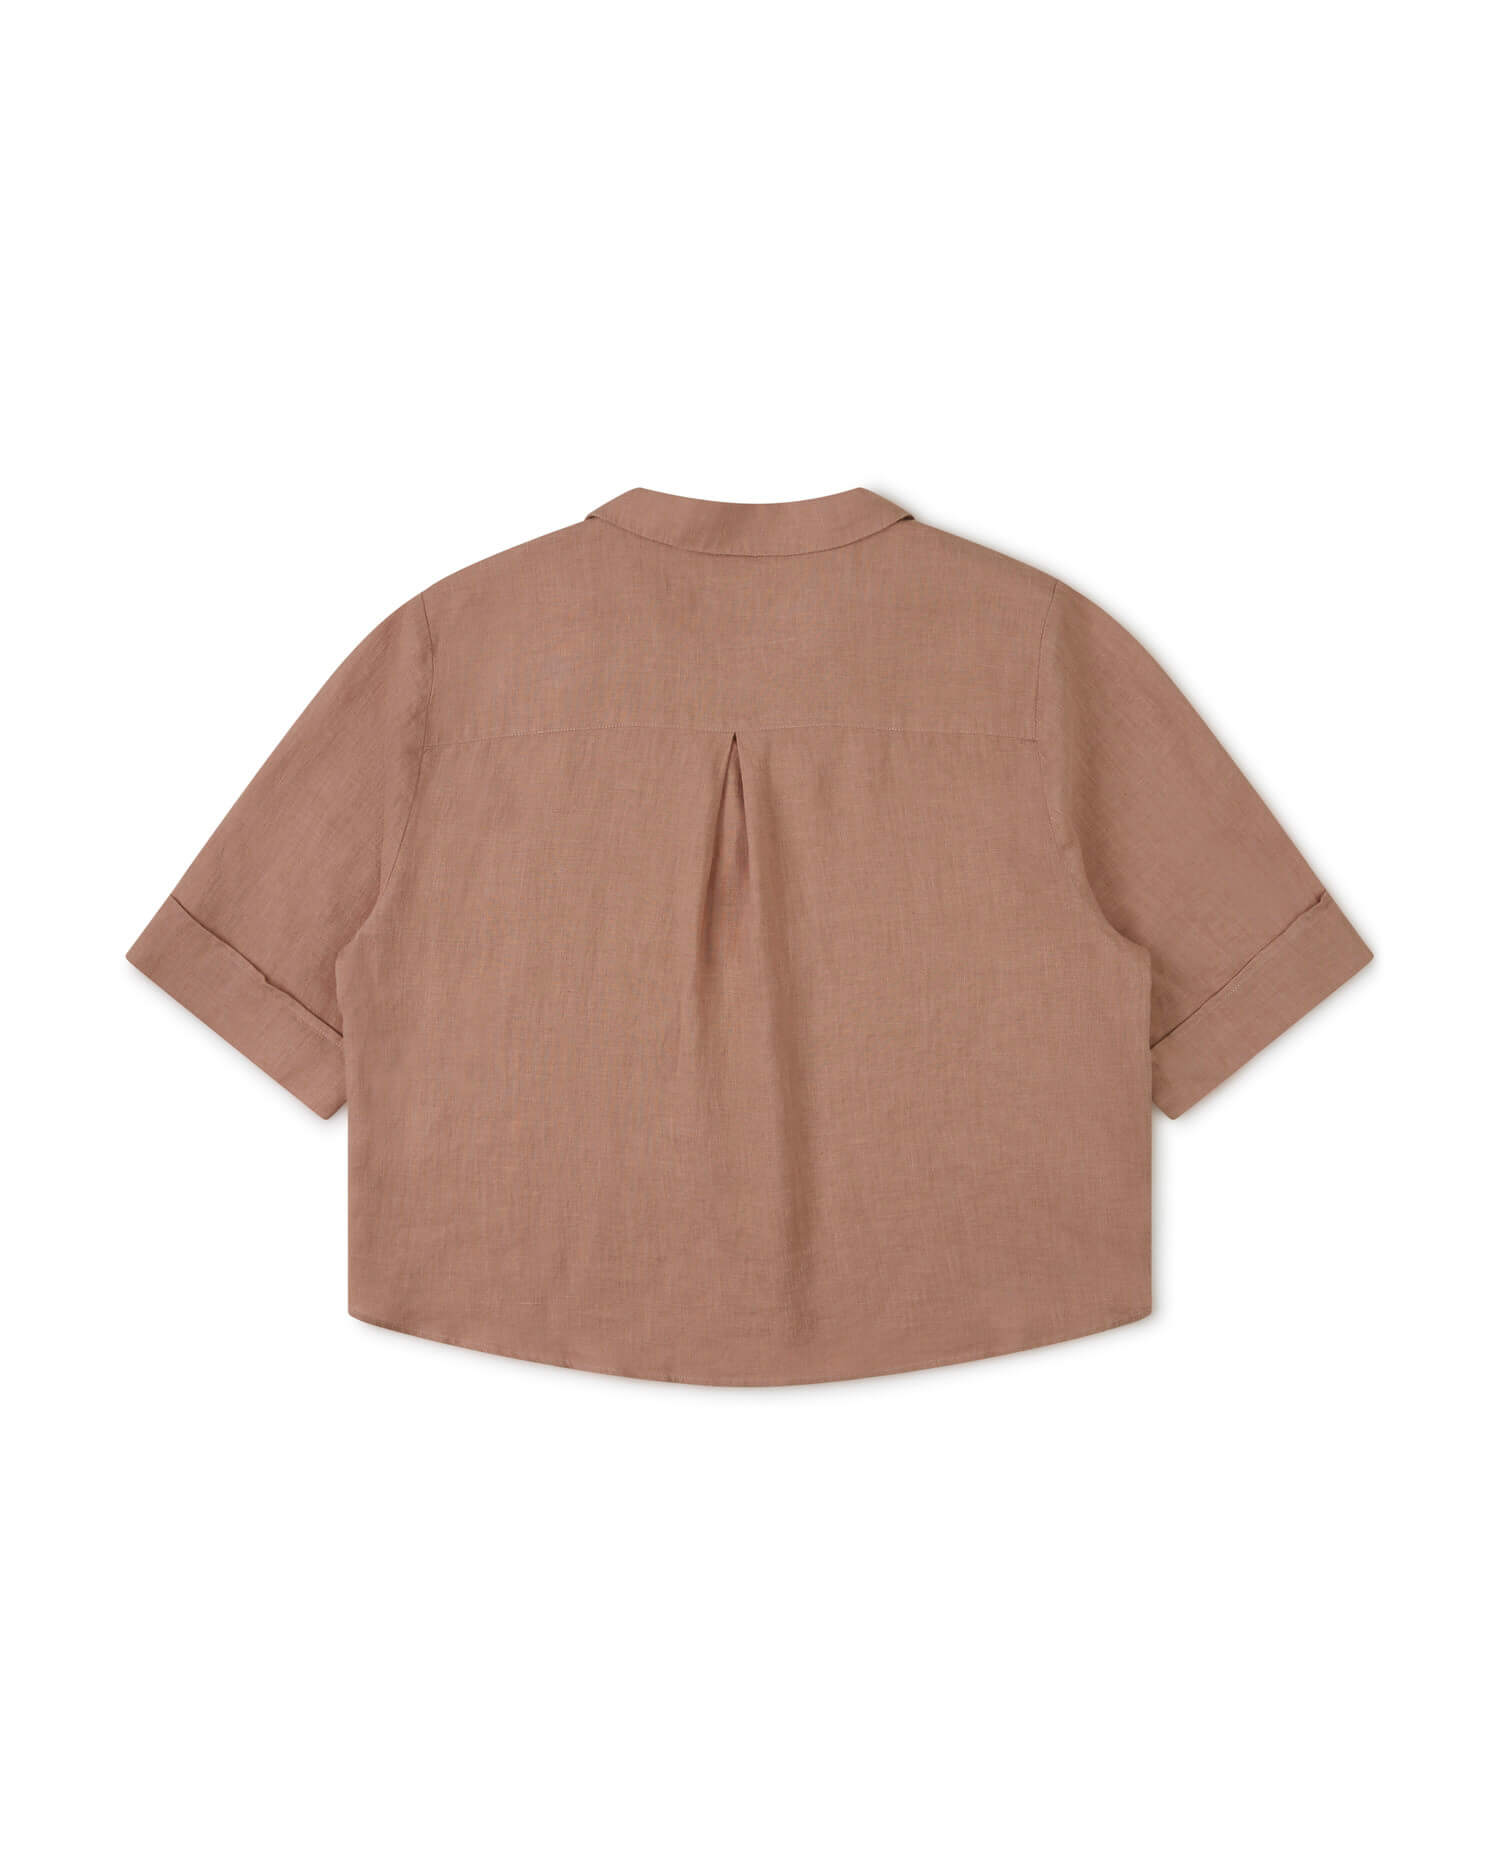 Rosé blouse made of linen by Matona